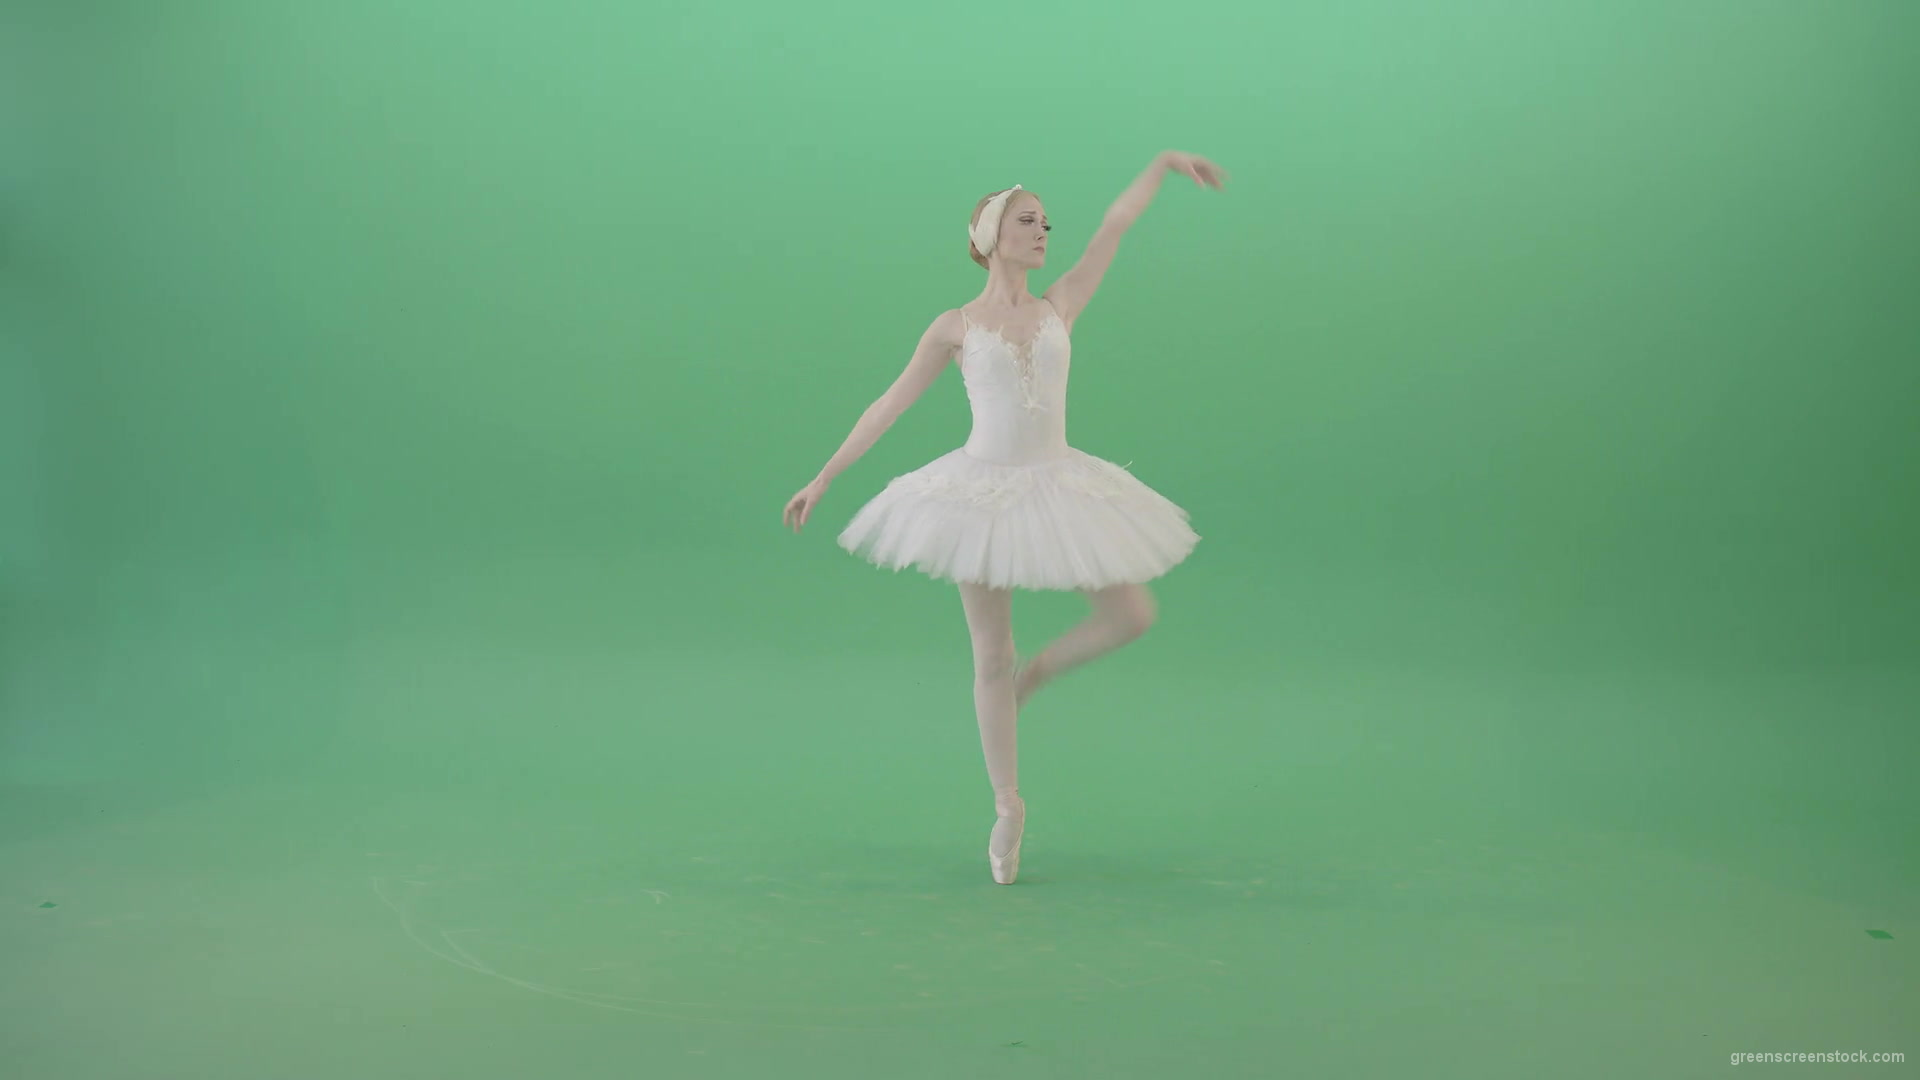 Prima-ballerina-ballet-girl-elegant-dancing-and-spinning-on-green-screen-4K-Video-Footage-1920_002 Green Screen Stock